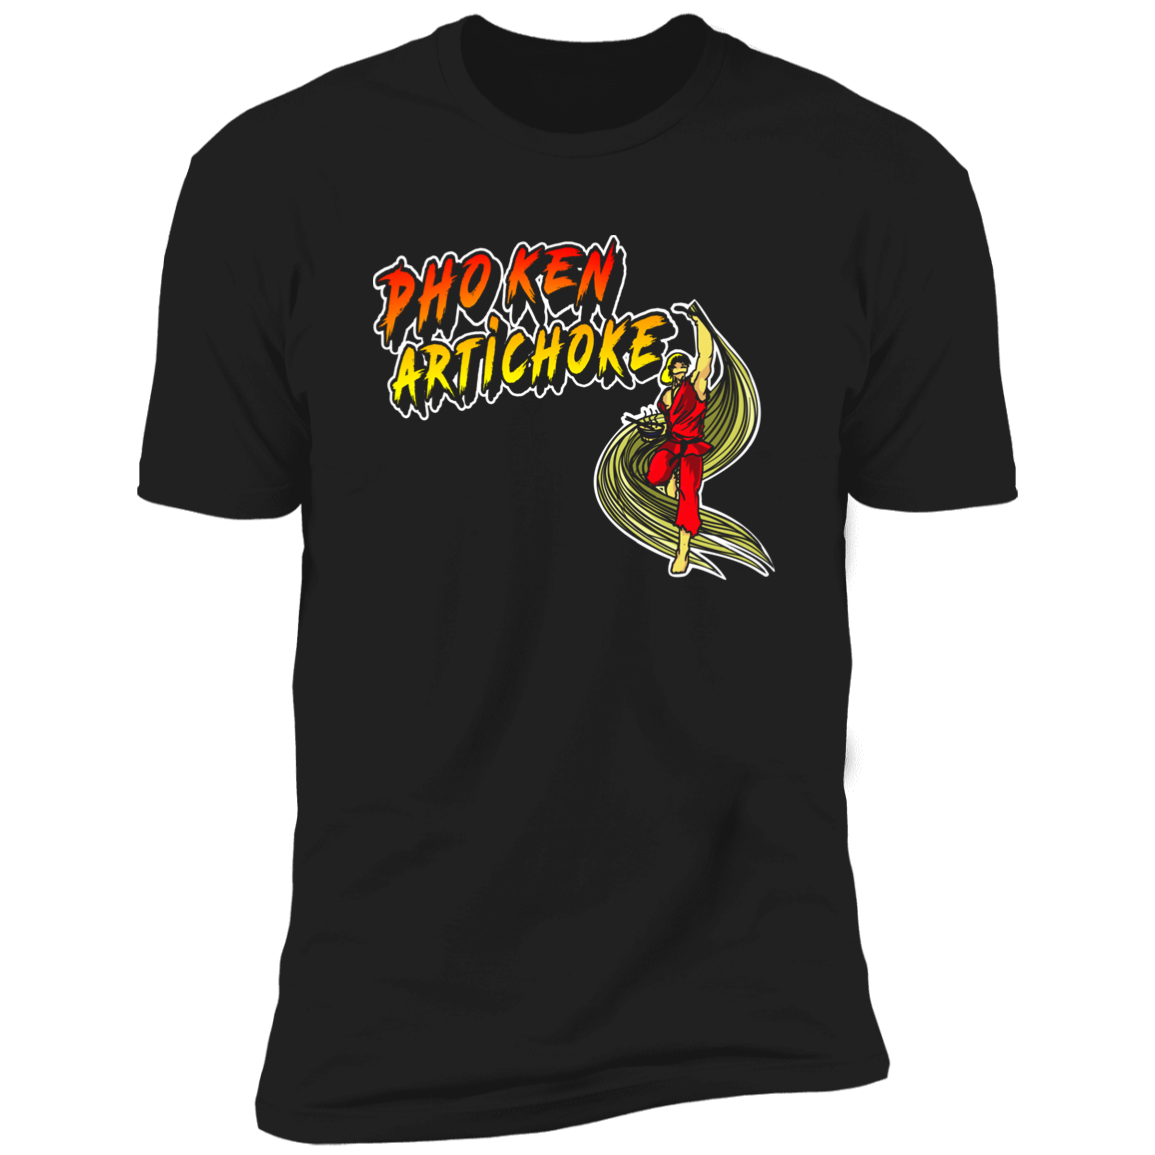 ArtichokeUSA Custom Design. Pho Ken Artichoke. Street Fighter Parody. Gaming. Men's Premium Short Sleeve T-Shirt